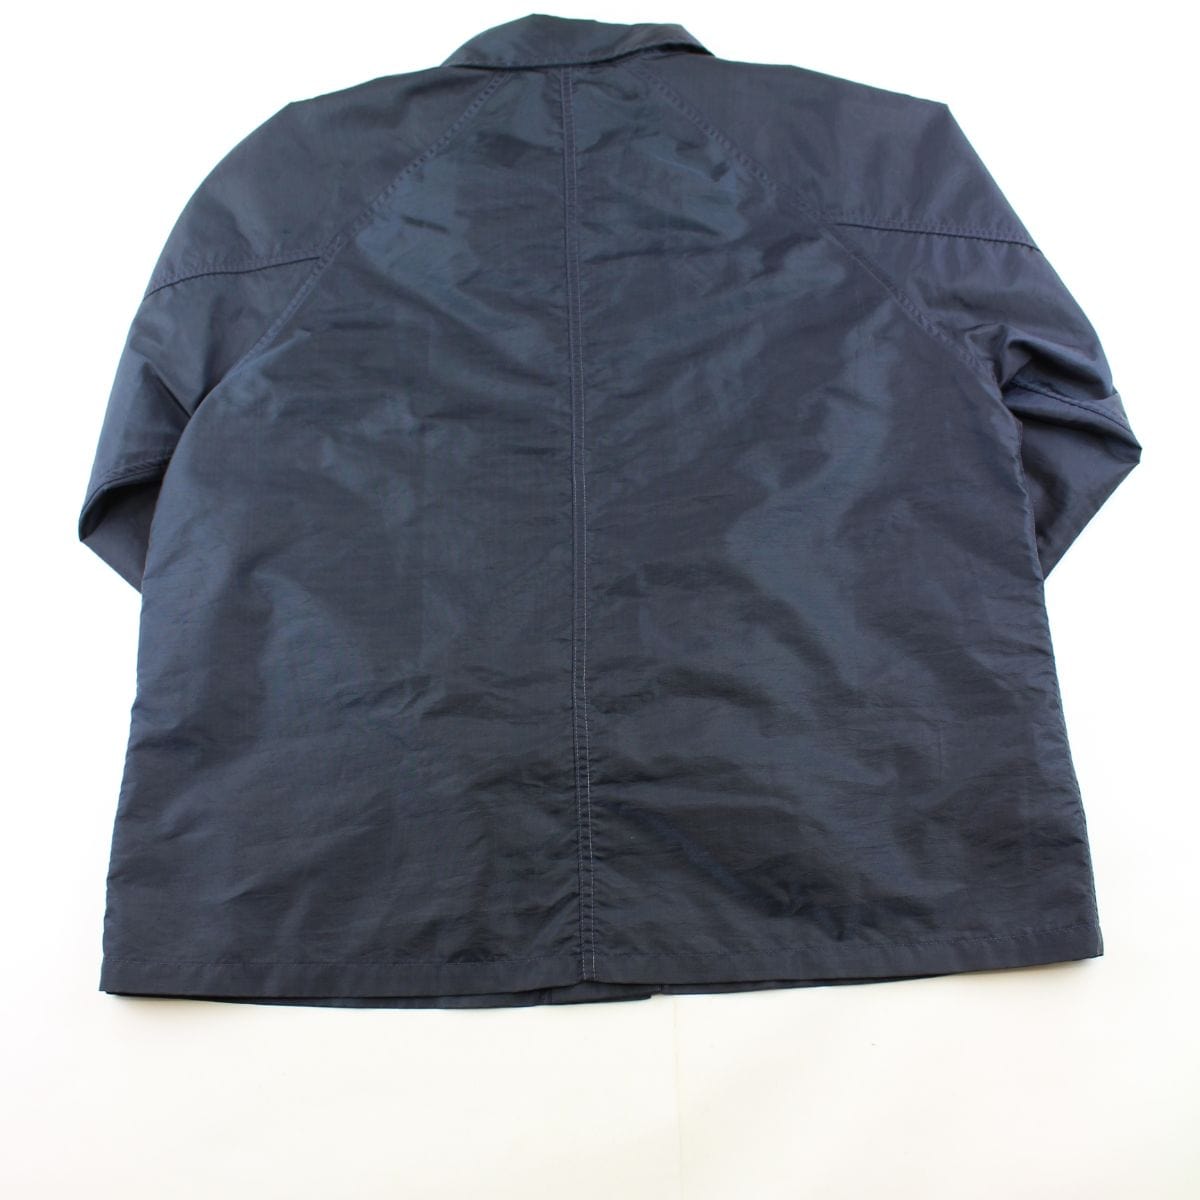 stone island formula steel jacket 1996 - SaruGeneral